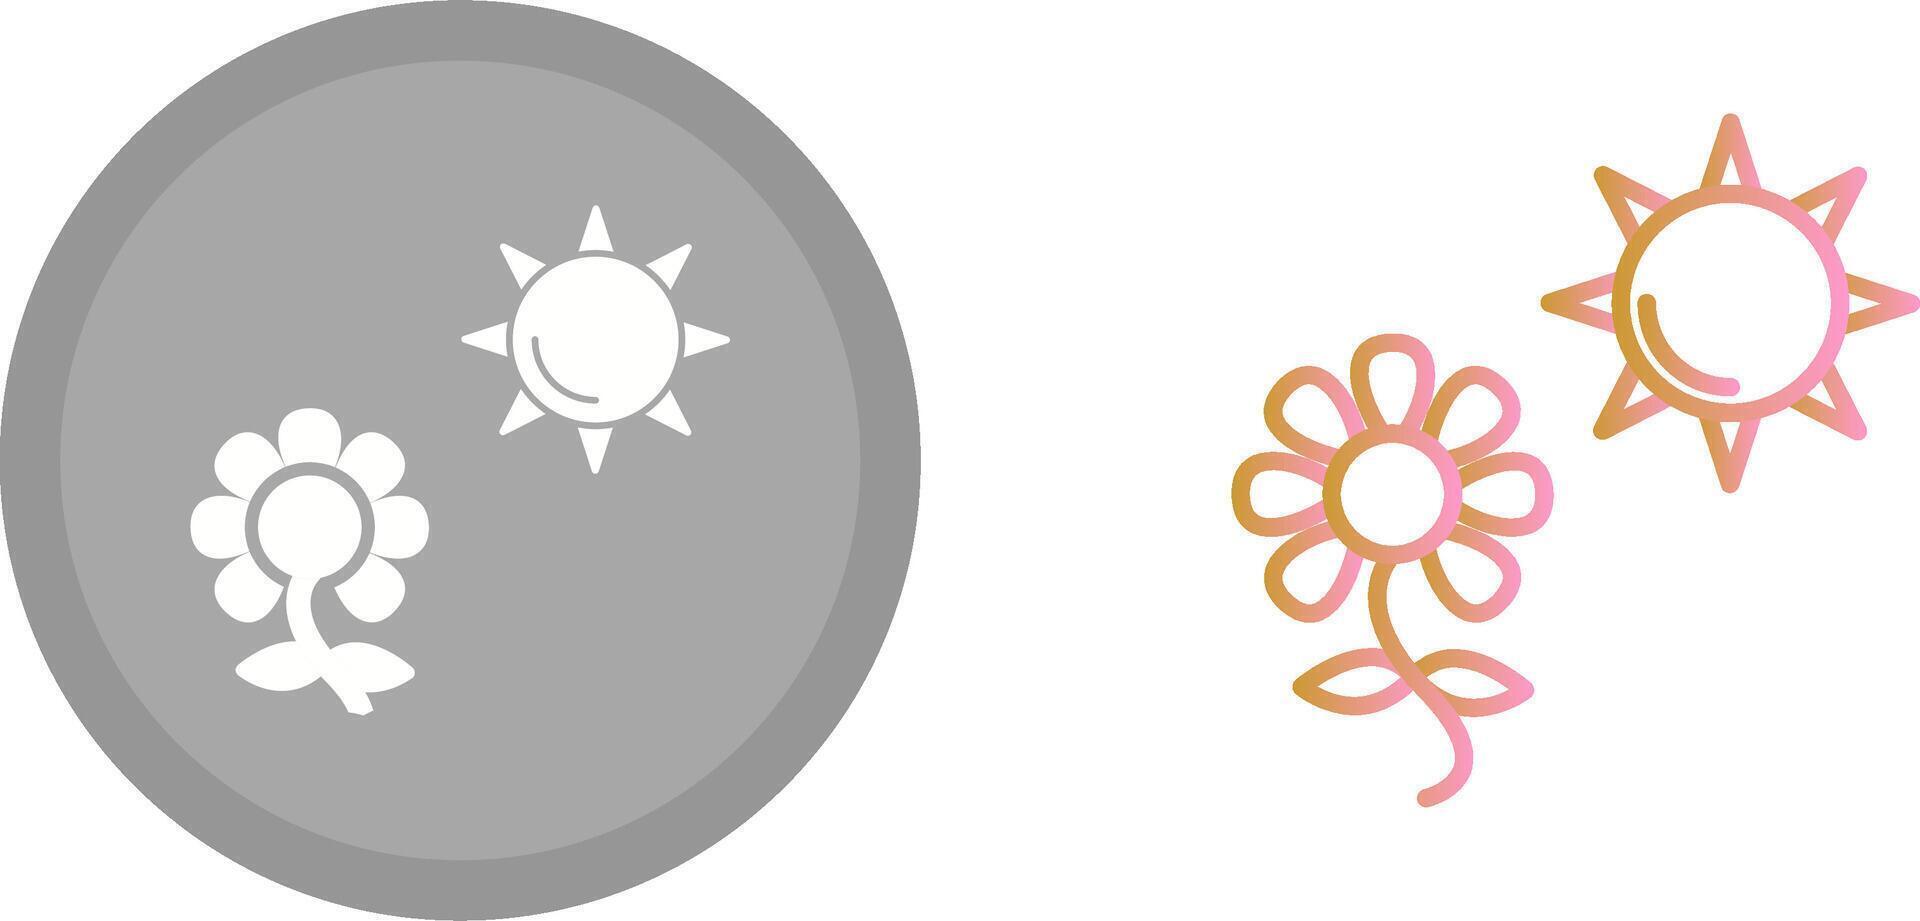 Flower in sunlight Icon vector